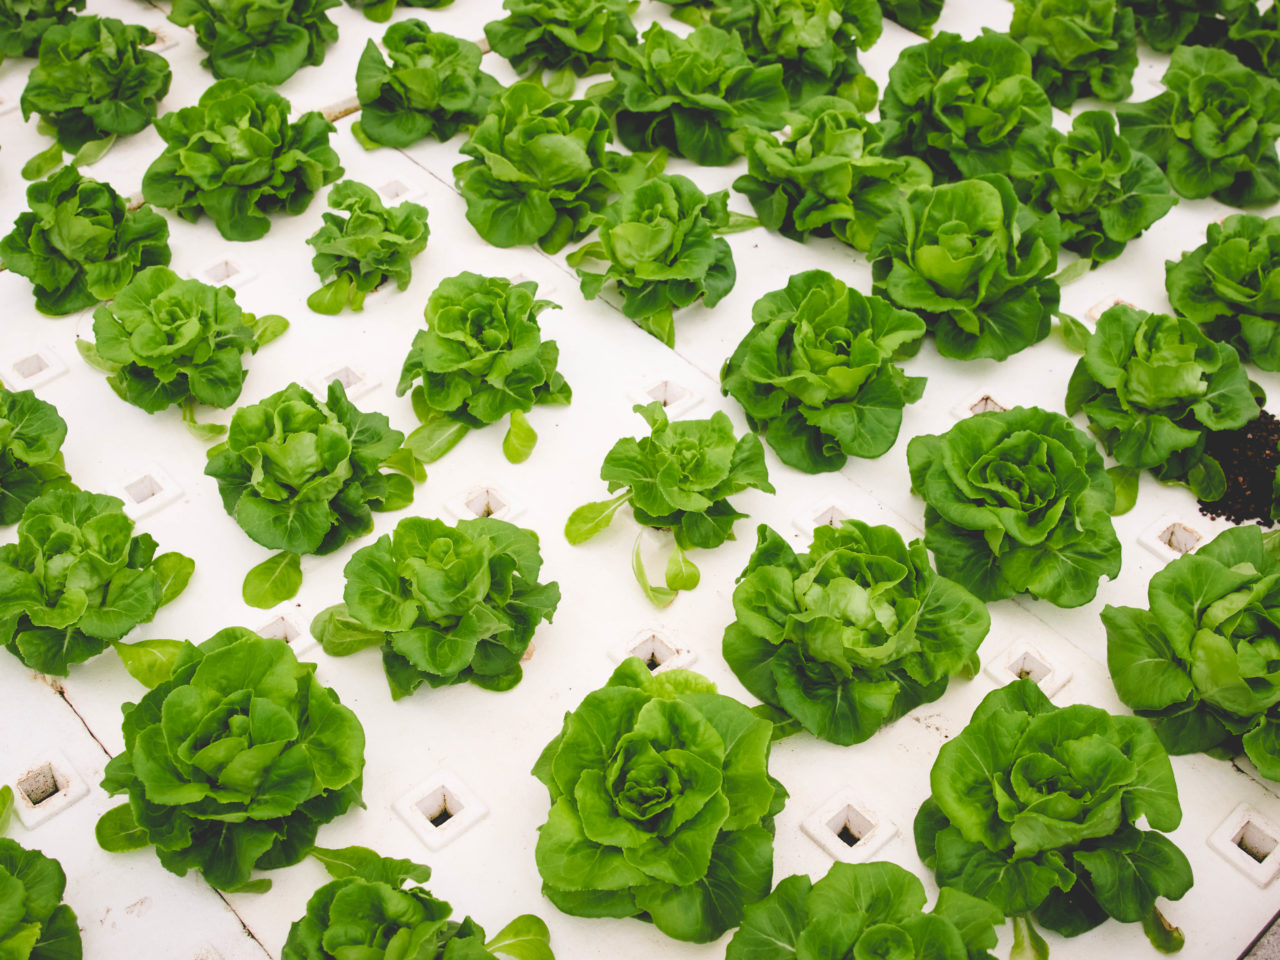 lettuce crop overhead view